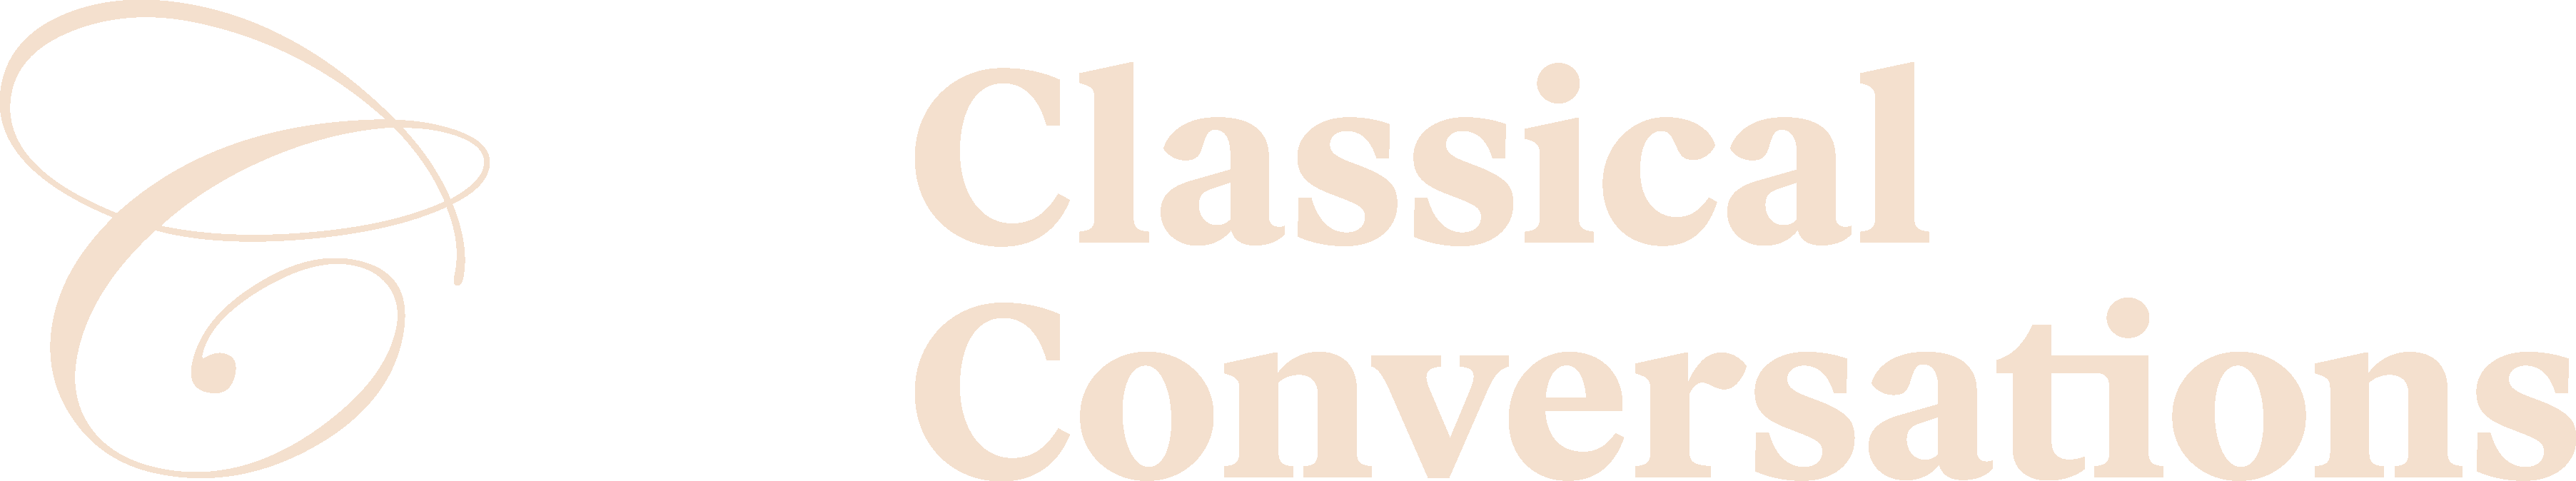 Classical Conversations logo in cream white